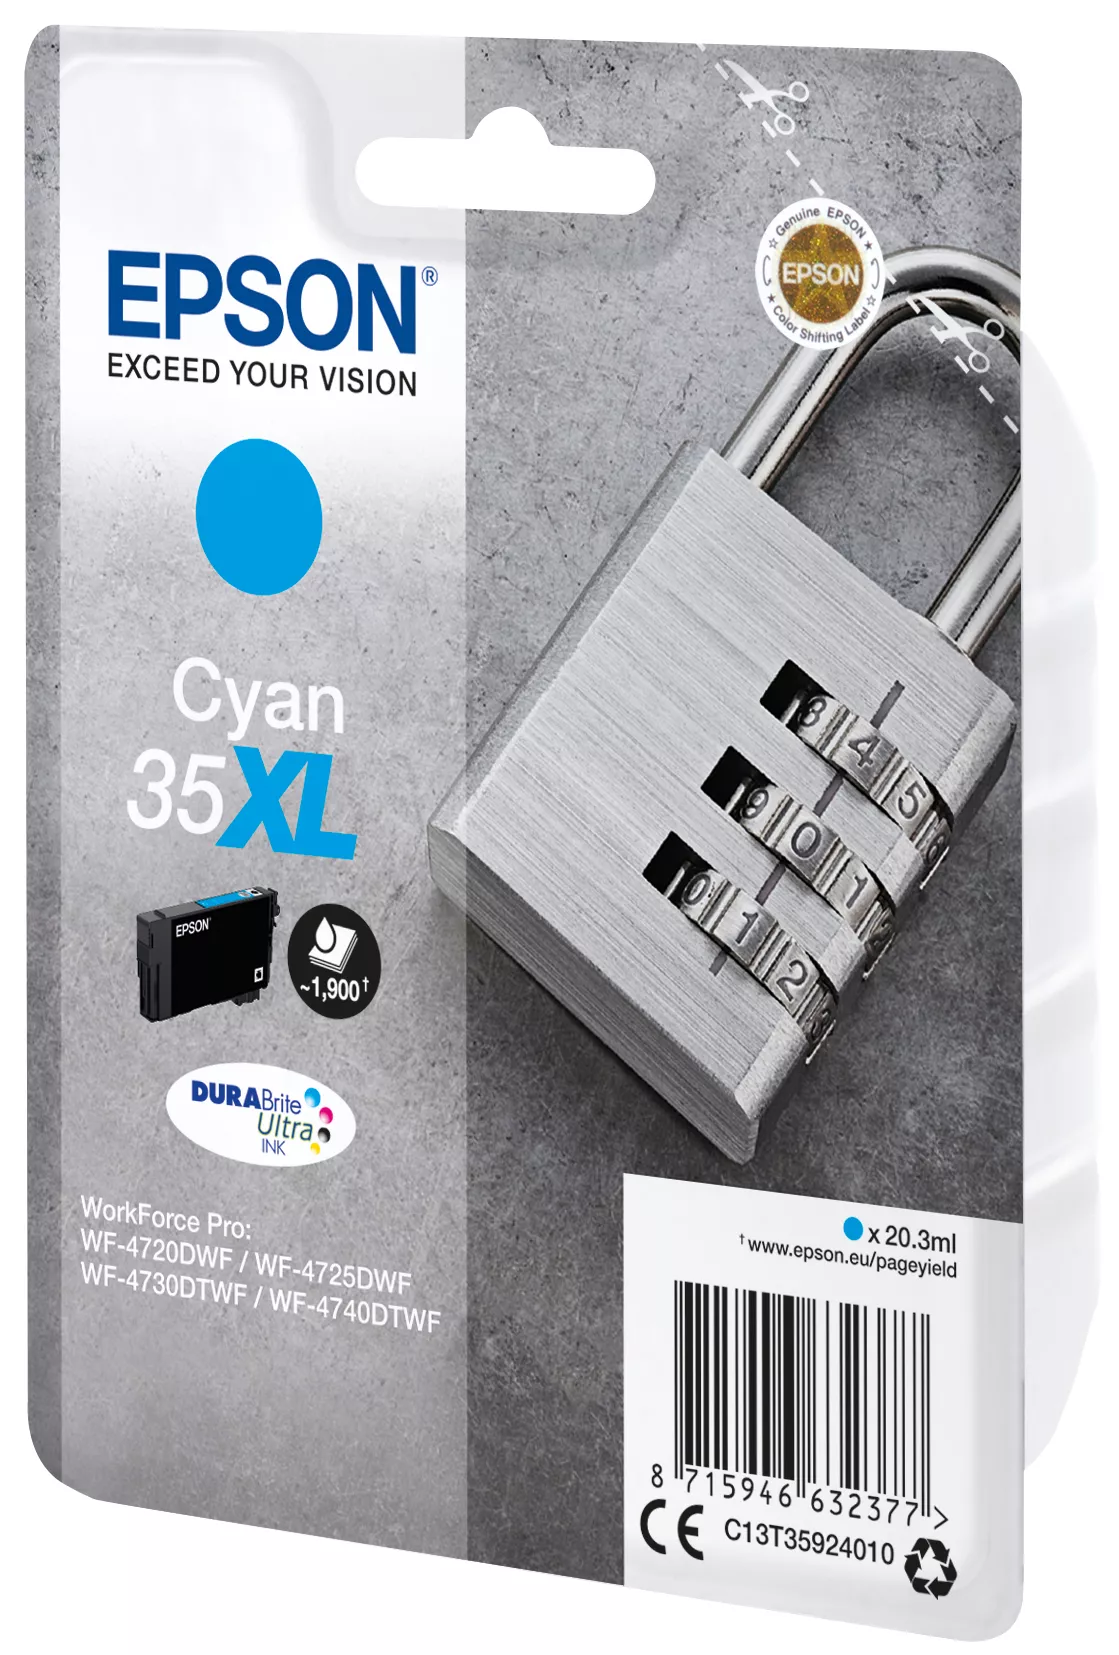 Vente EPSON Cartouche Cadenas - Encre DURABrite Ultra C Epson au meilleur prix - visuel 2